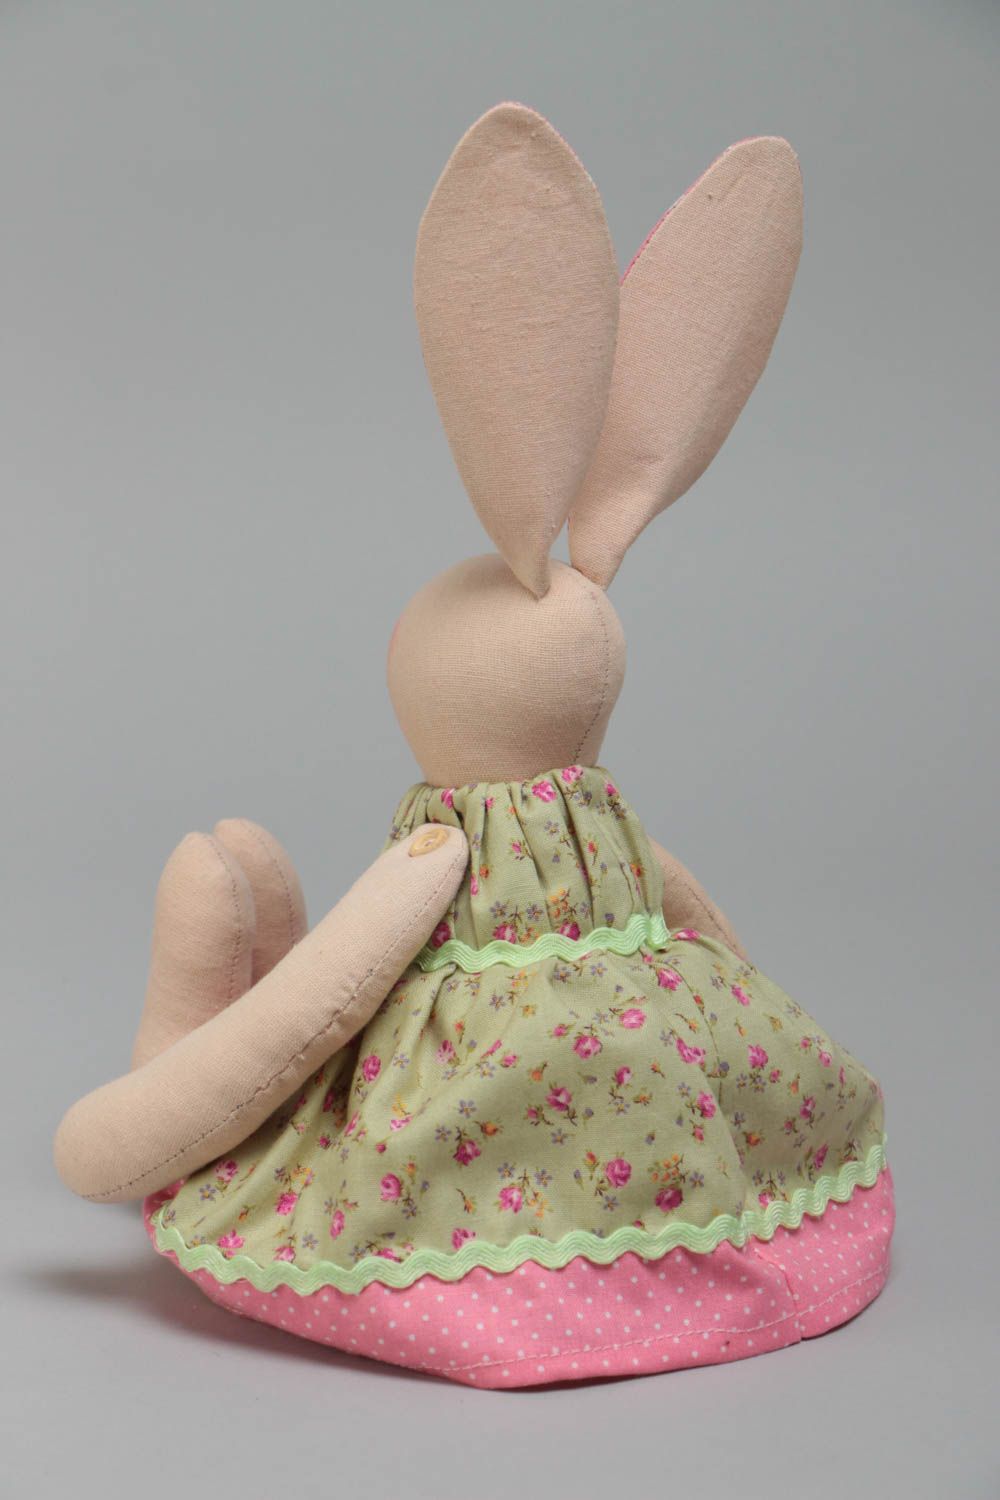 Juguete de peluche de tela artesanal con forma de liebre en vestido infantil foto 4